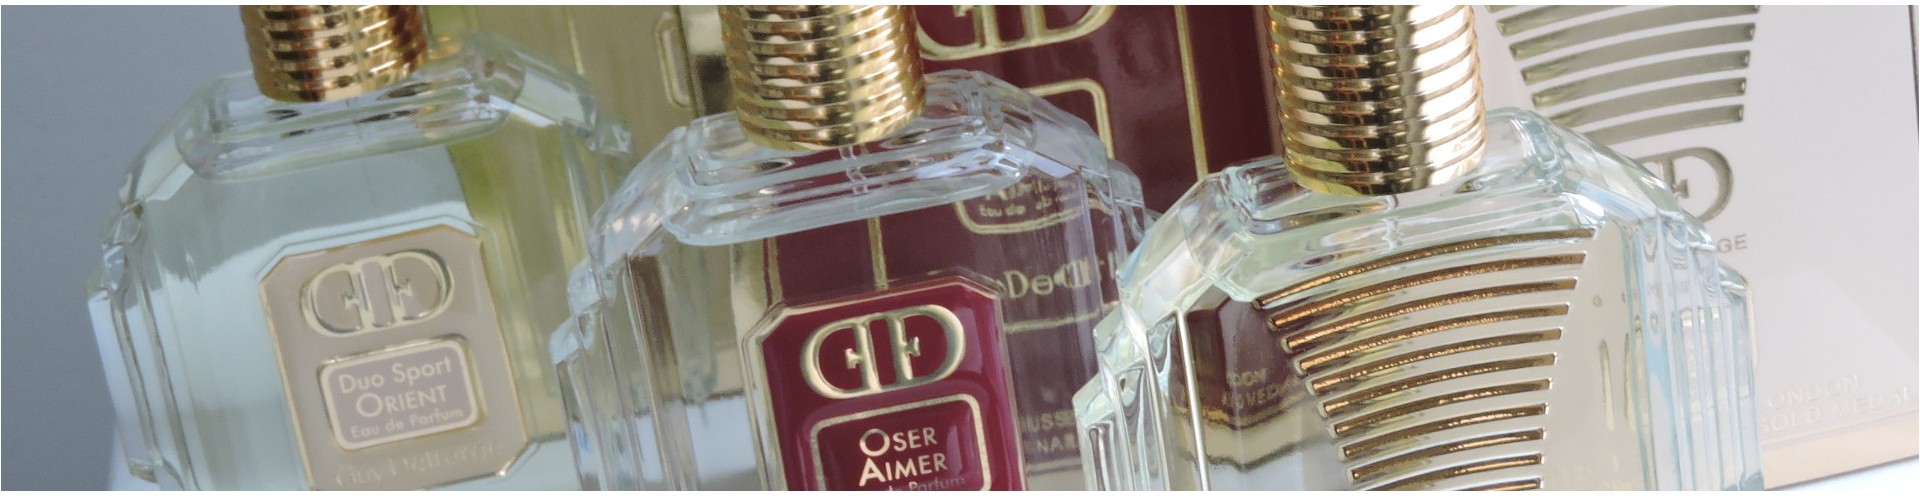 Fragrances Guy Delforge